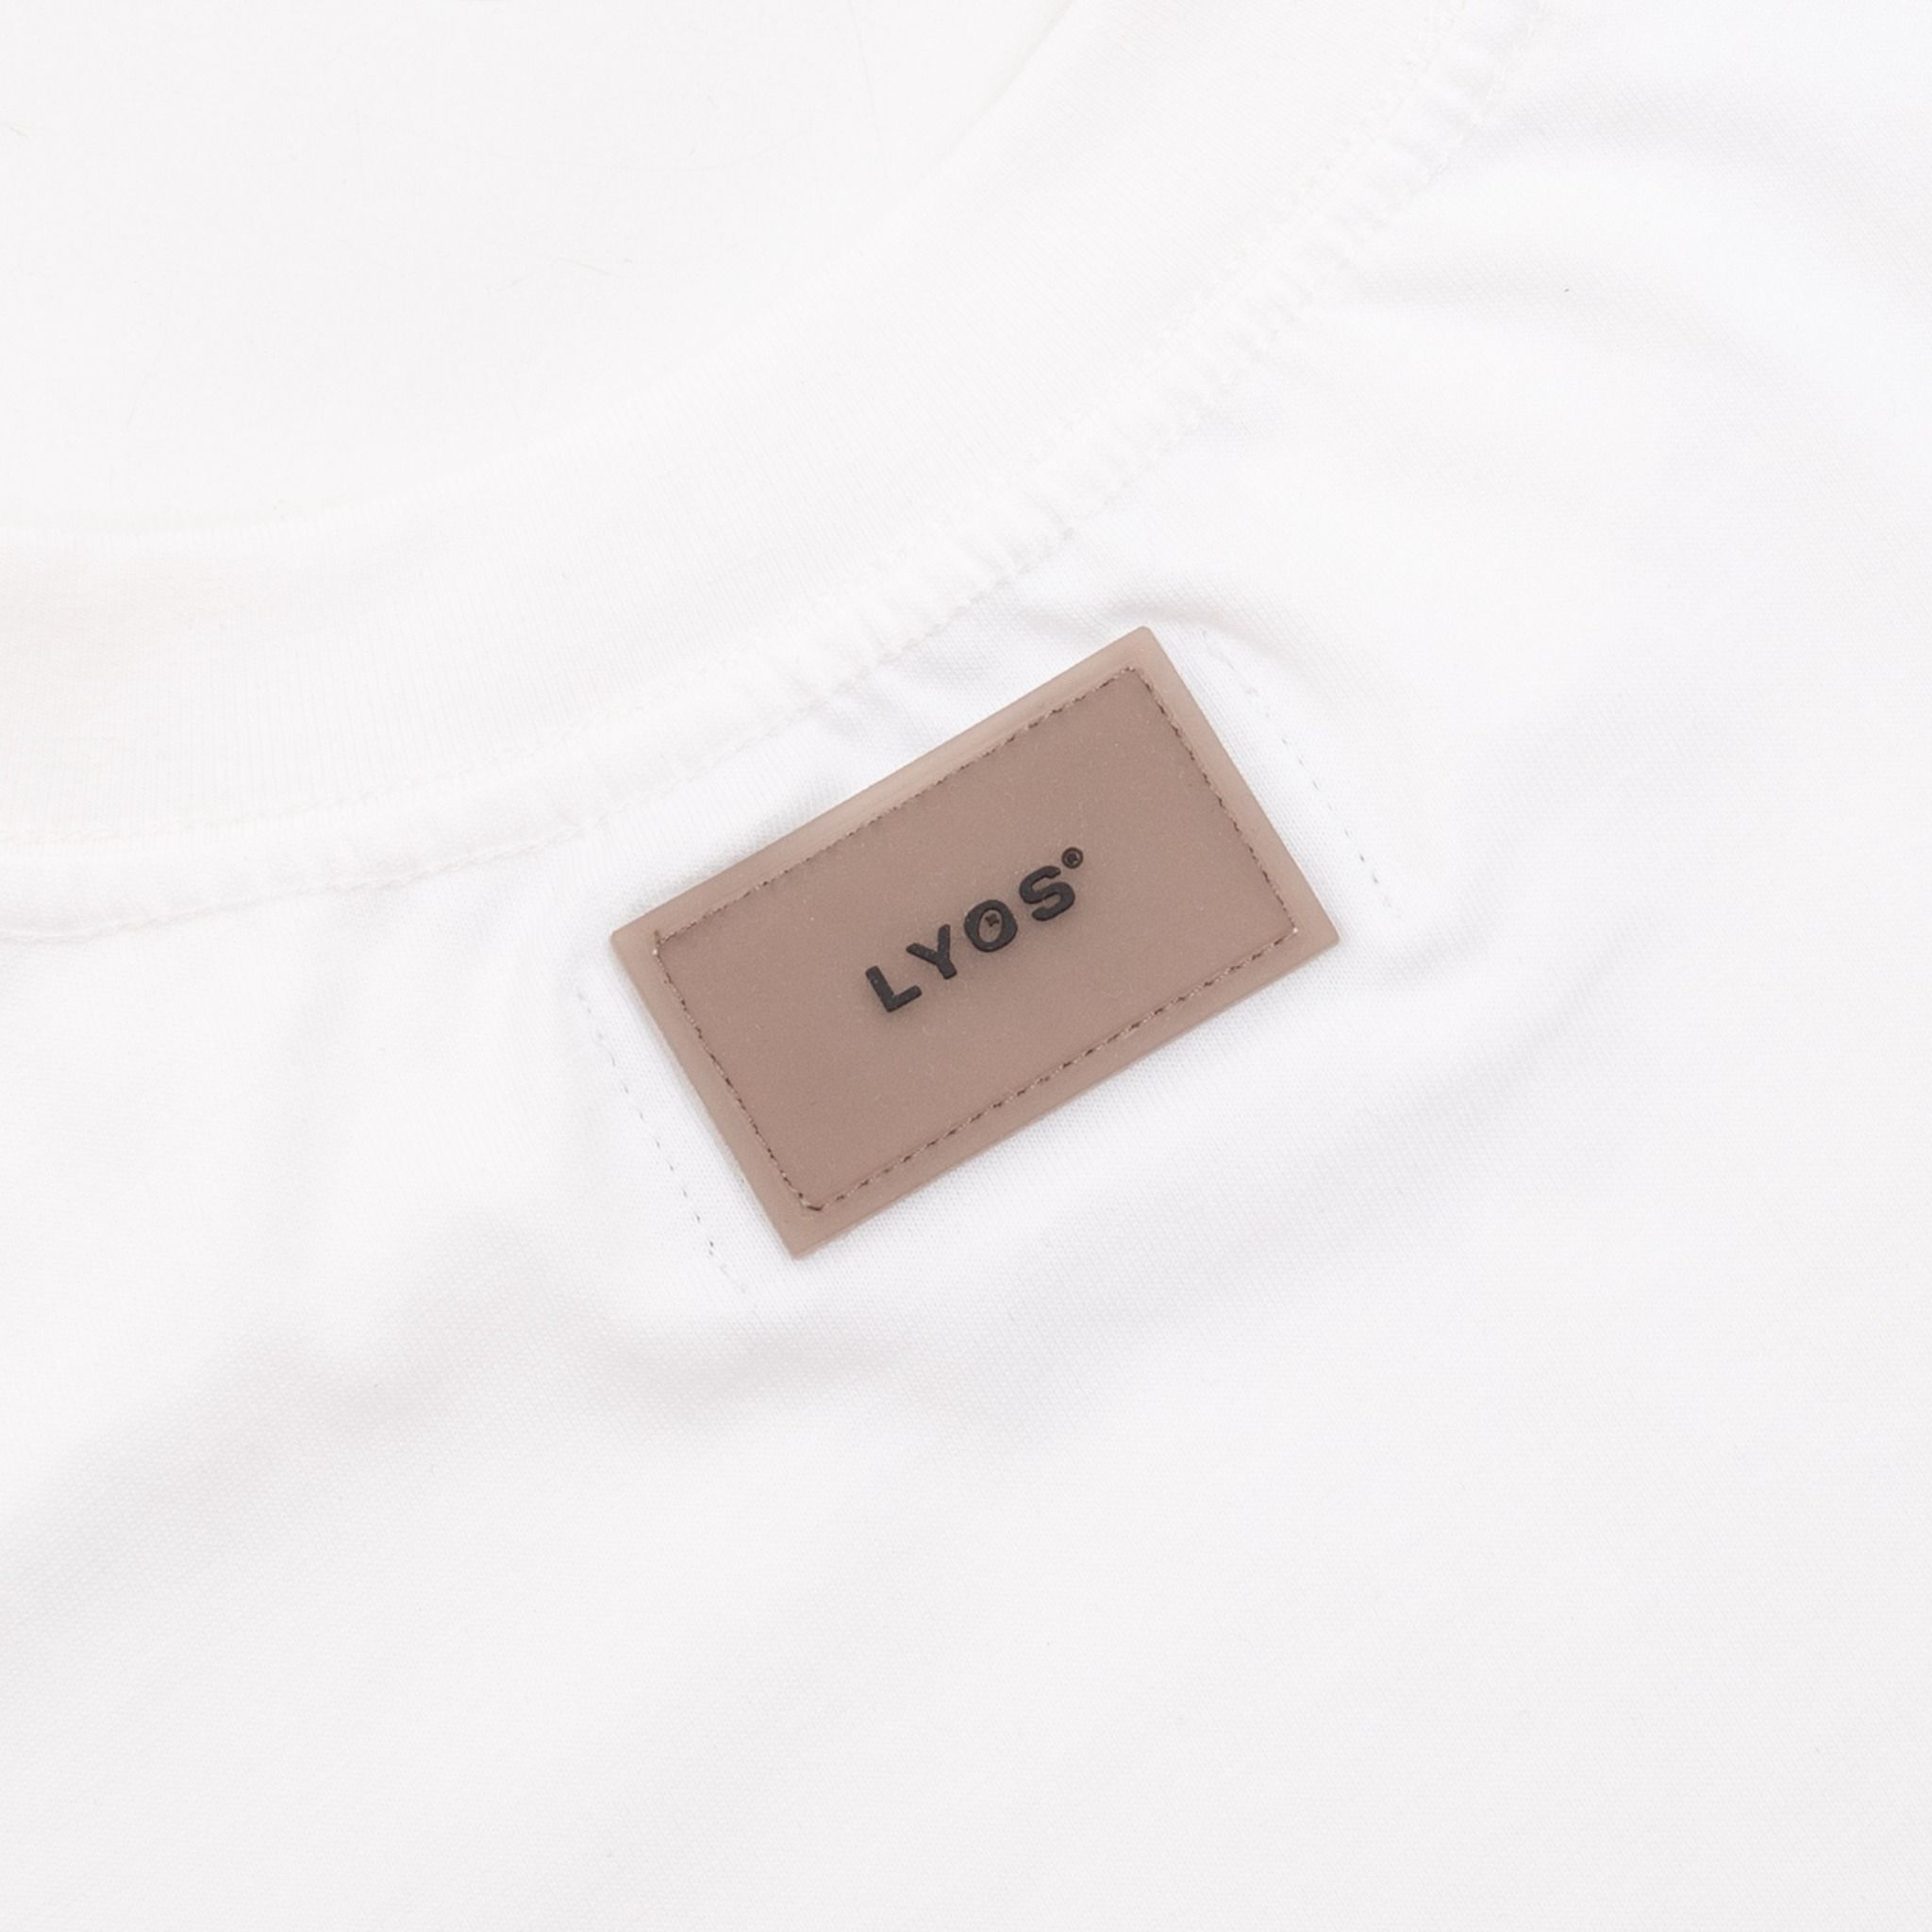  CYOS T-Shirt ( White ) 